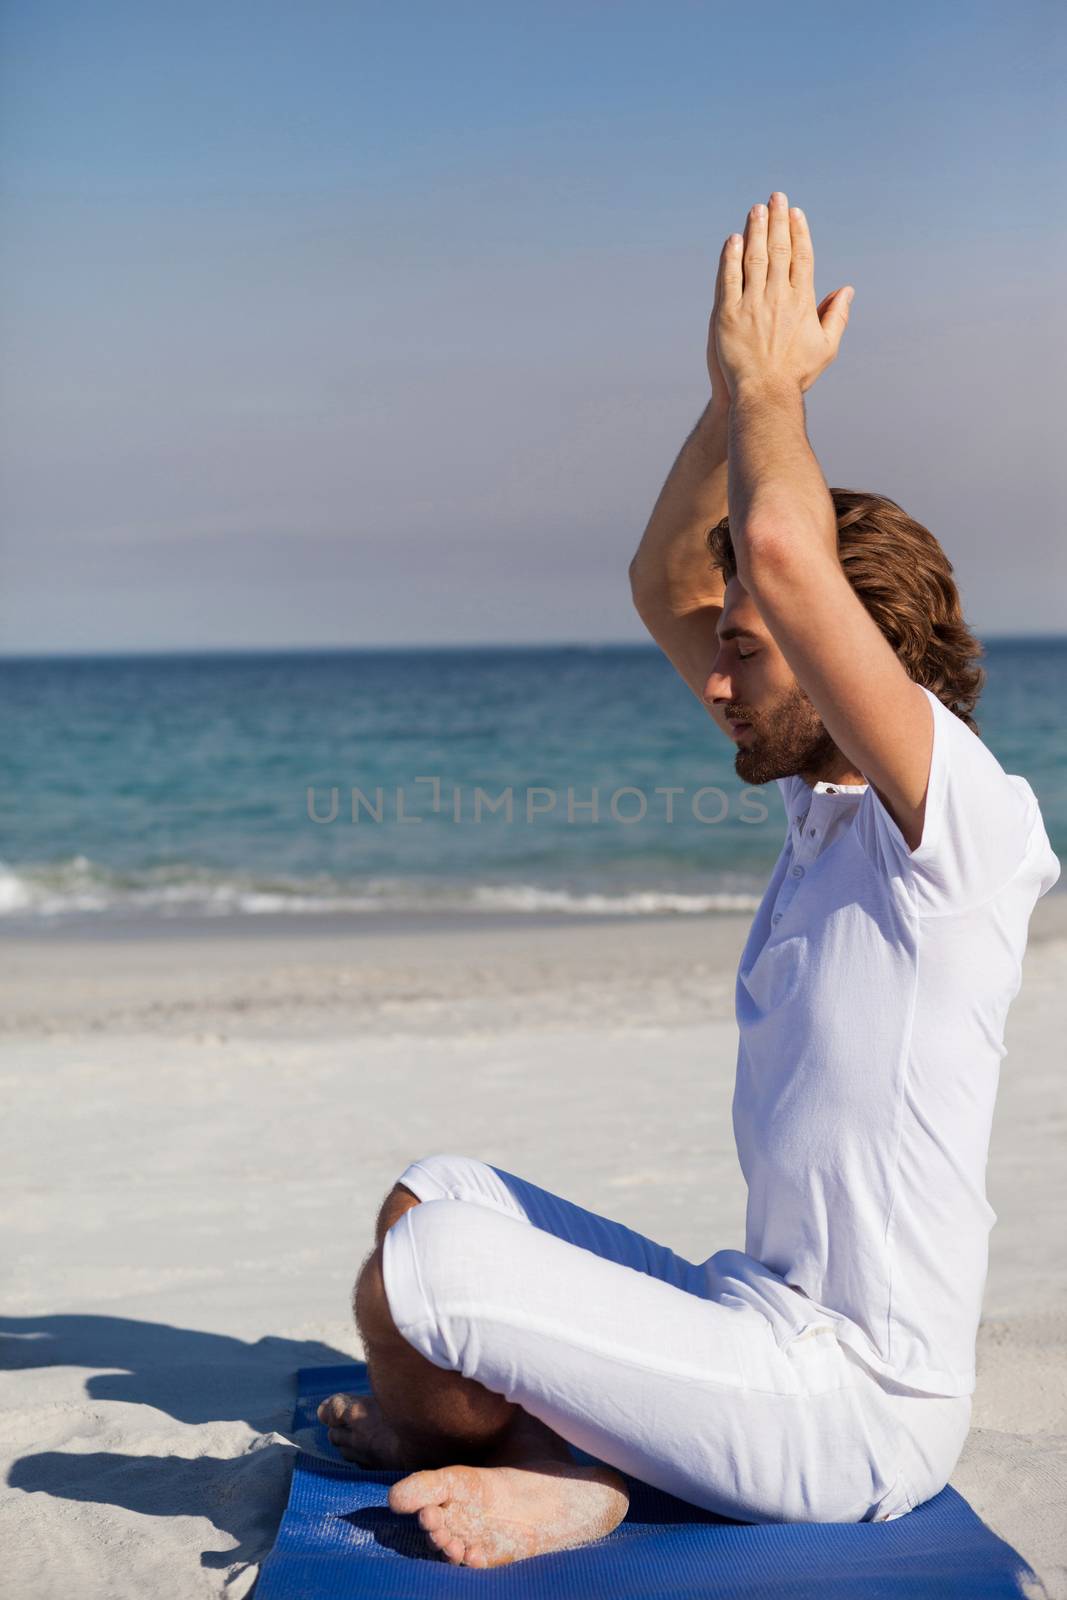 Man performing yoga at beach by Wavebreakmedia